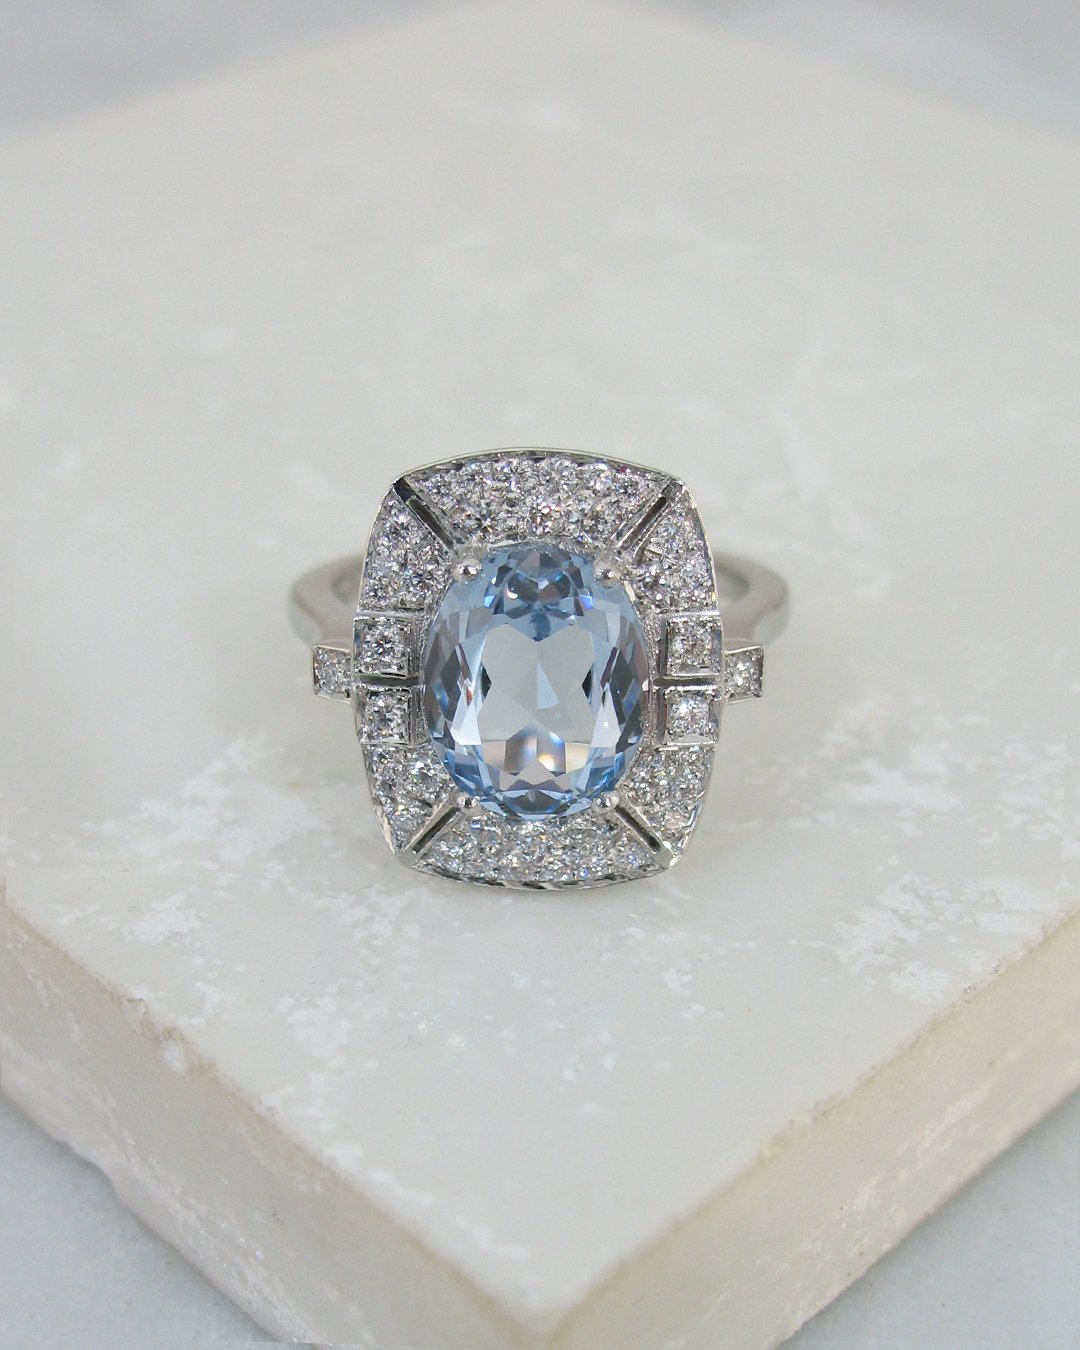 An Art Deco style diamond and aquamarine ring